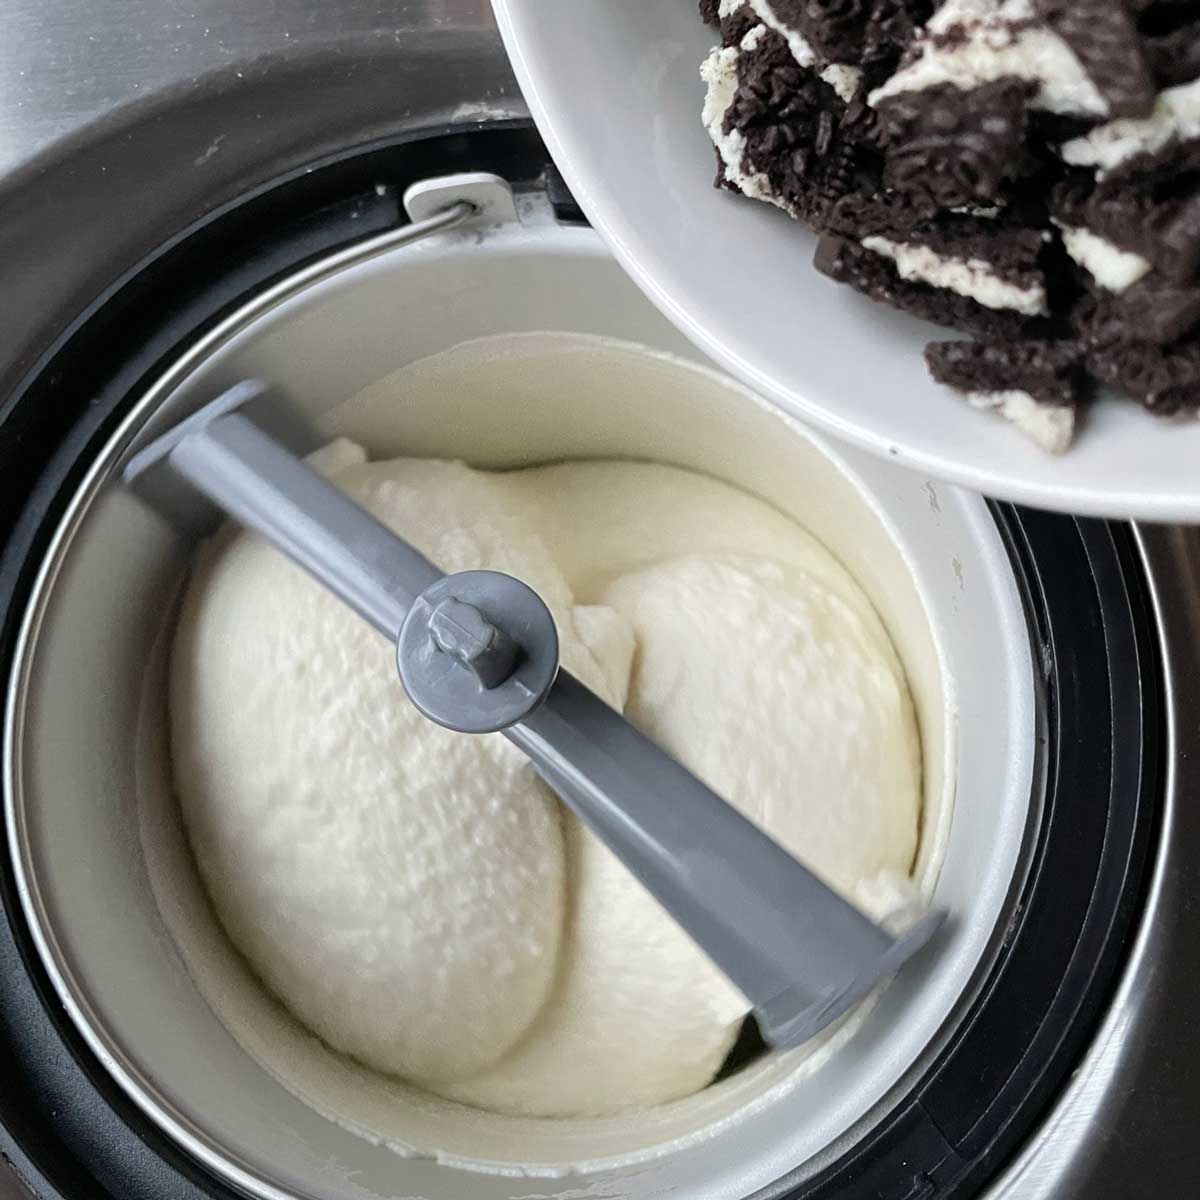 Cookie cream ice cream churning.